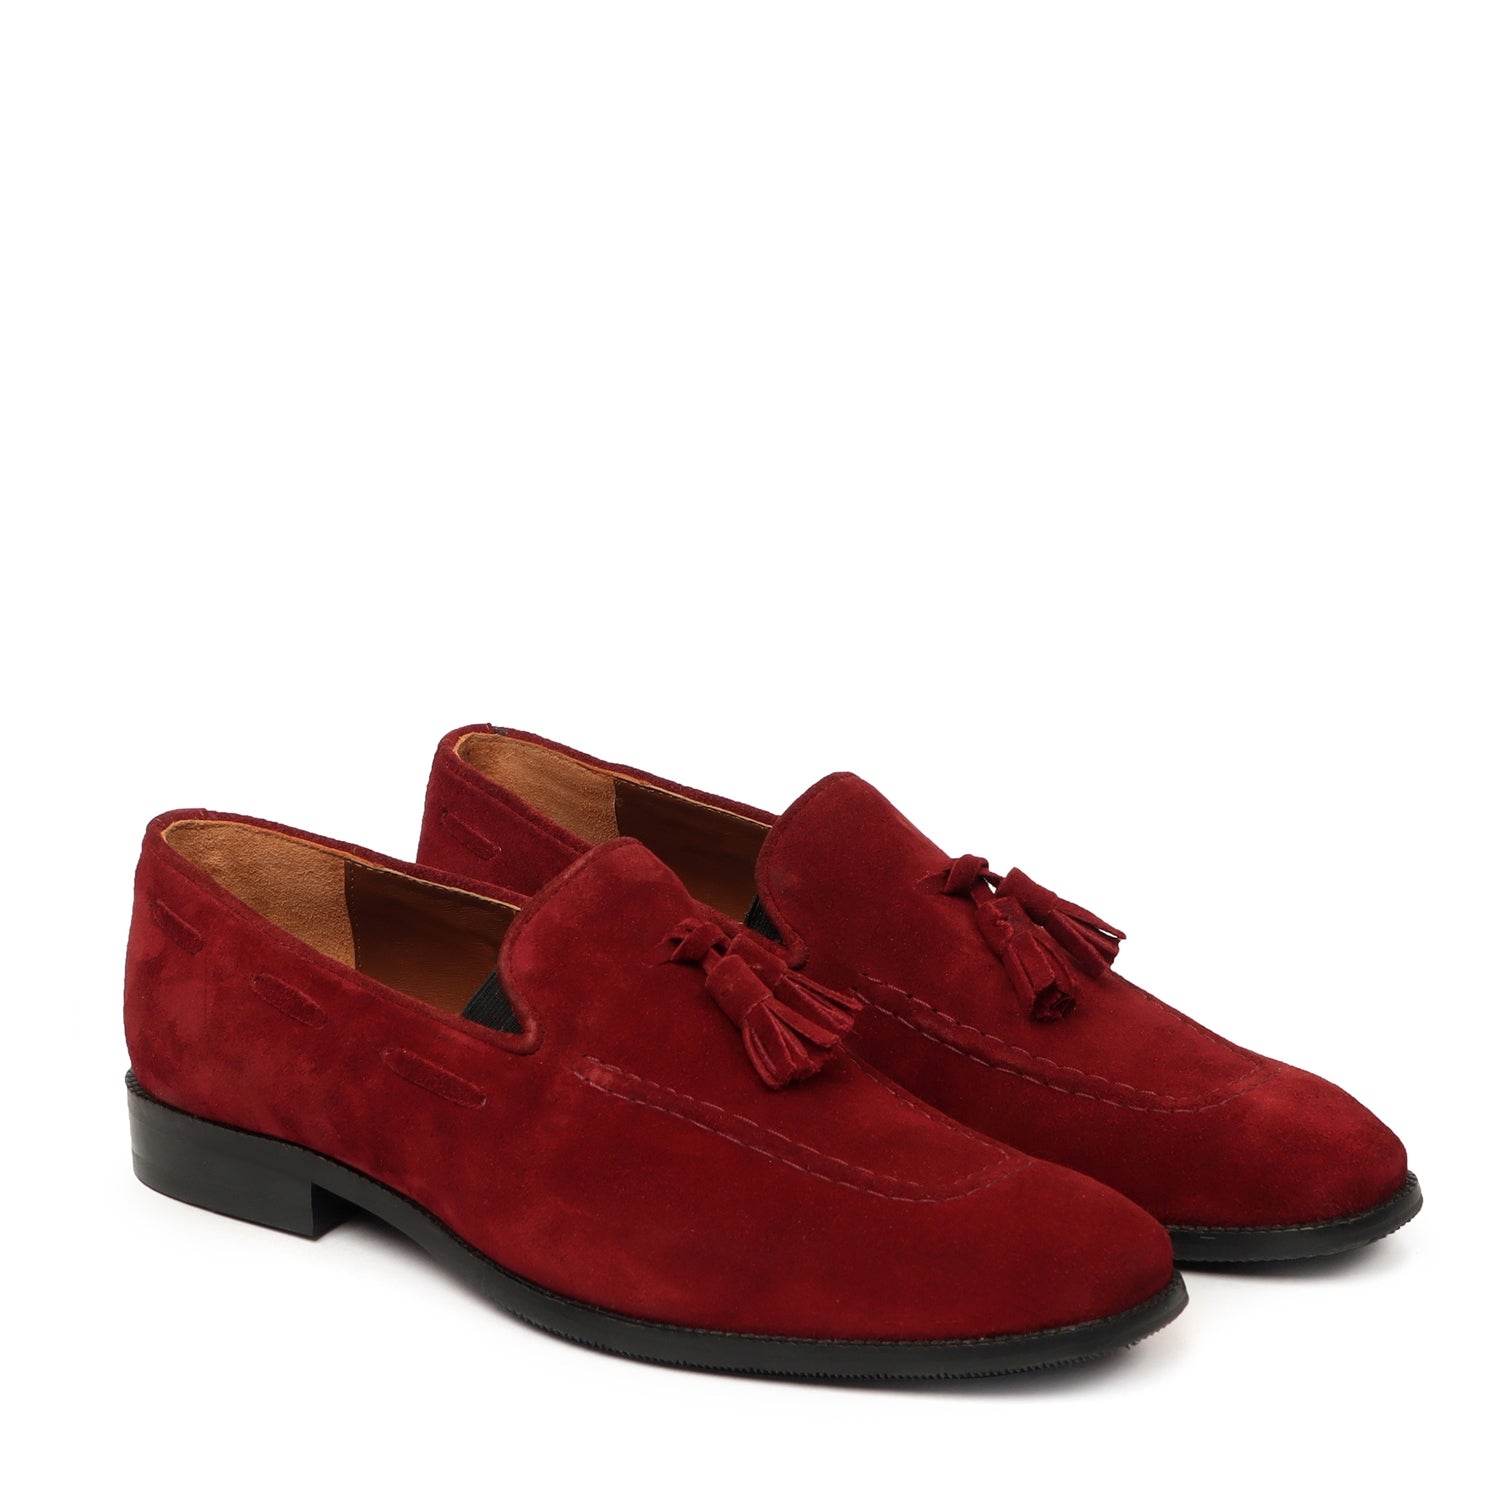 Men's Red Suede Leather Apron Toe Tassel Slip-ons by Brune & Bareskin